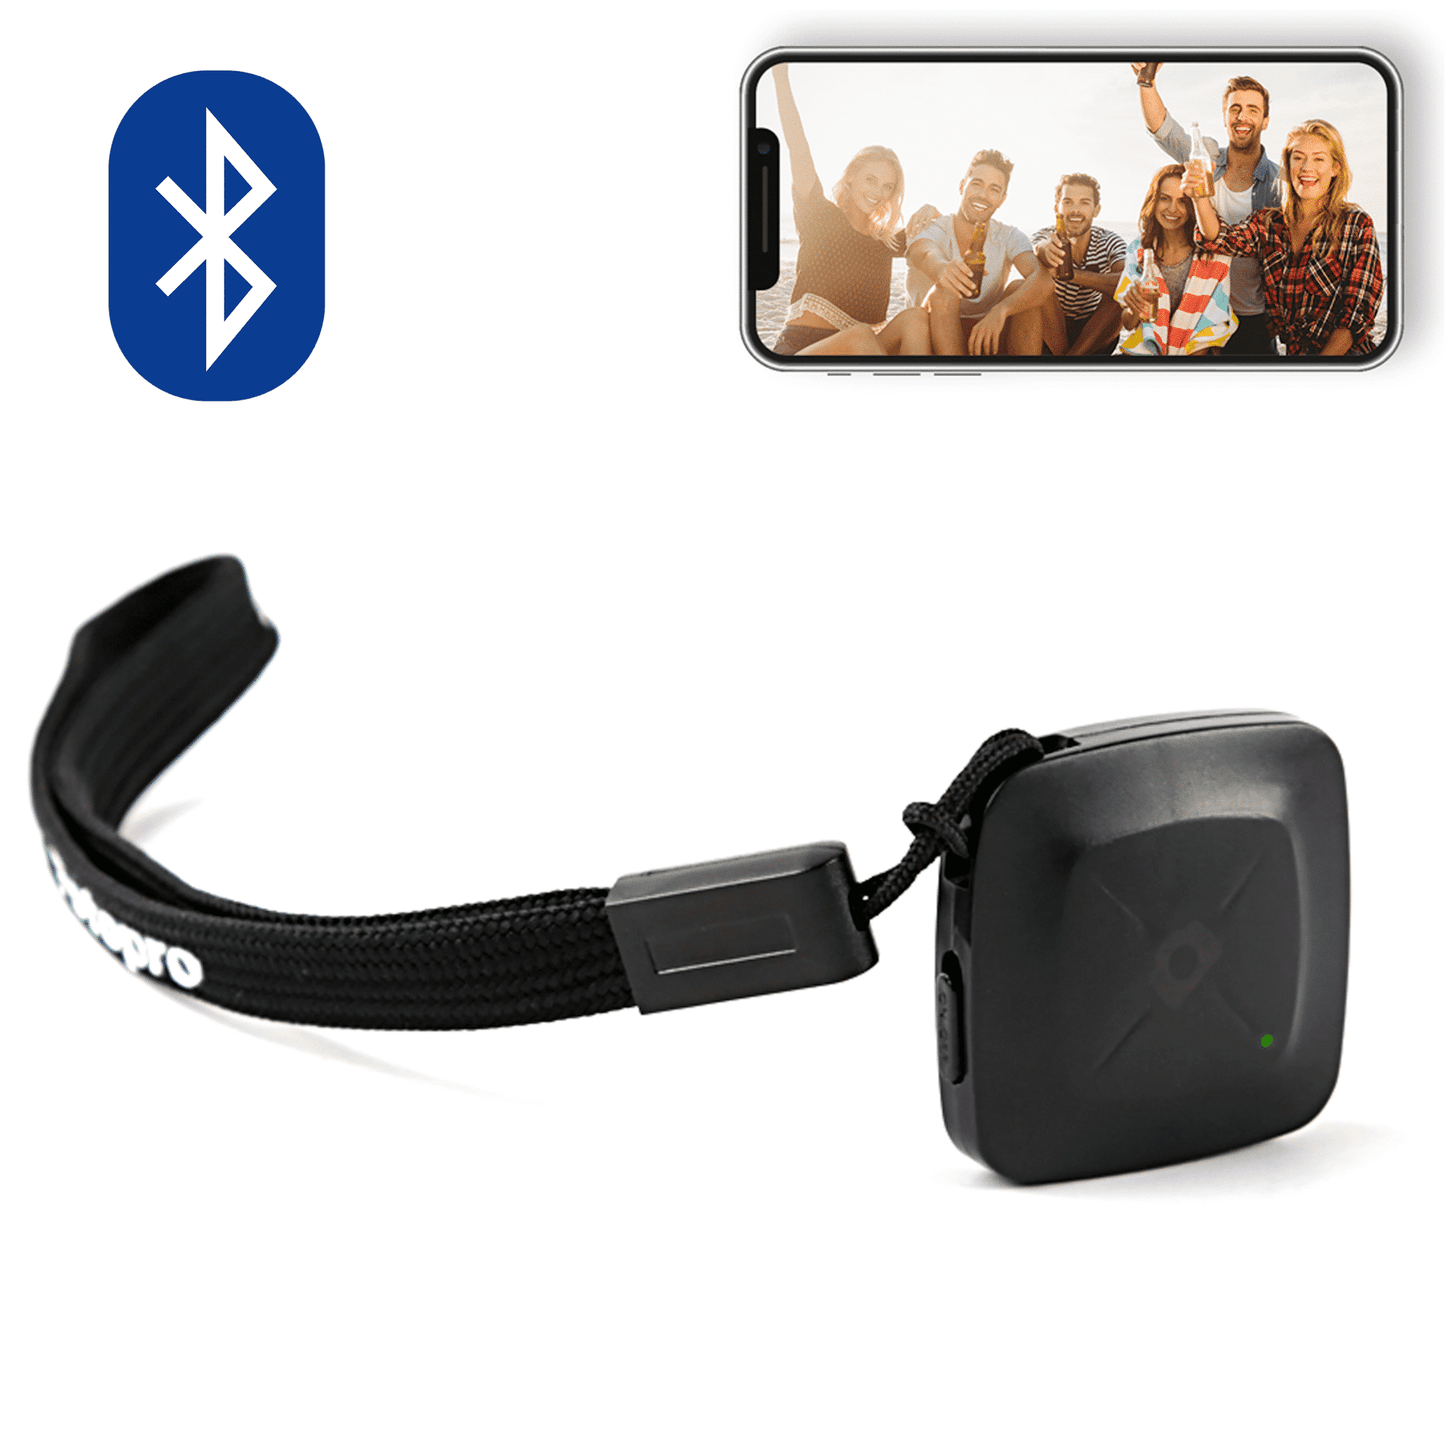 Fotopro Bluetooth remote shutter for smartphone camera BT-4 - black